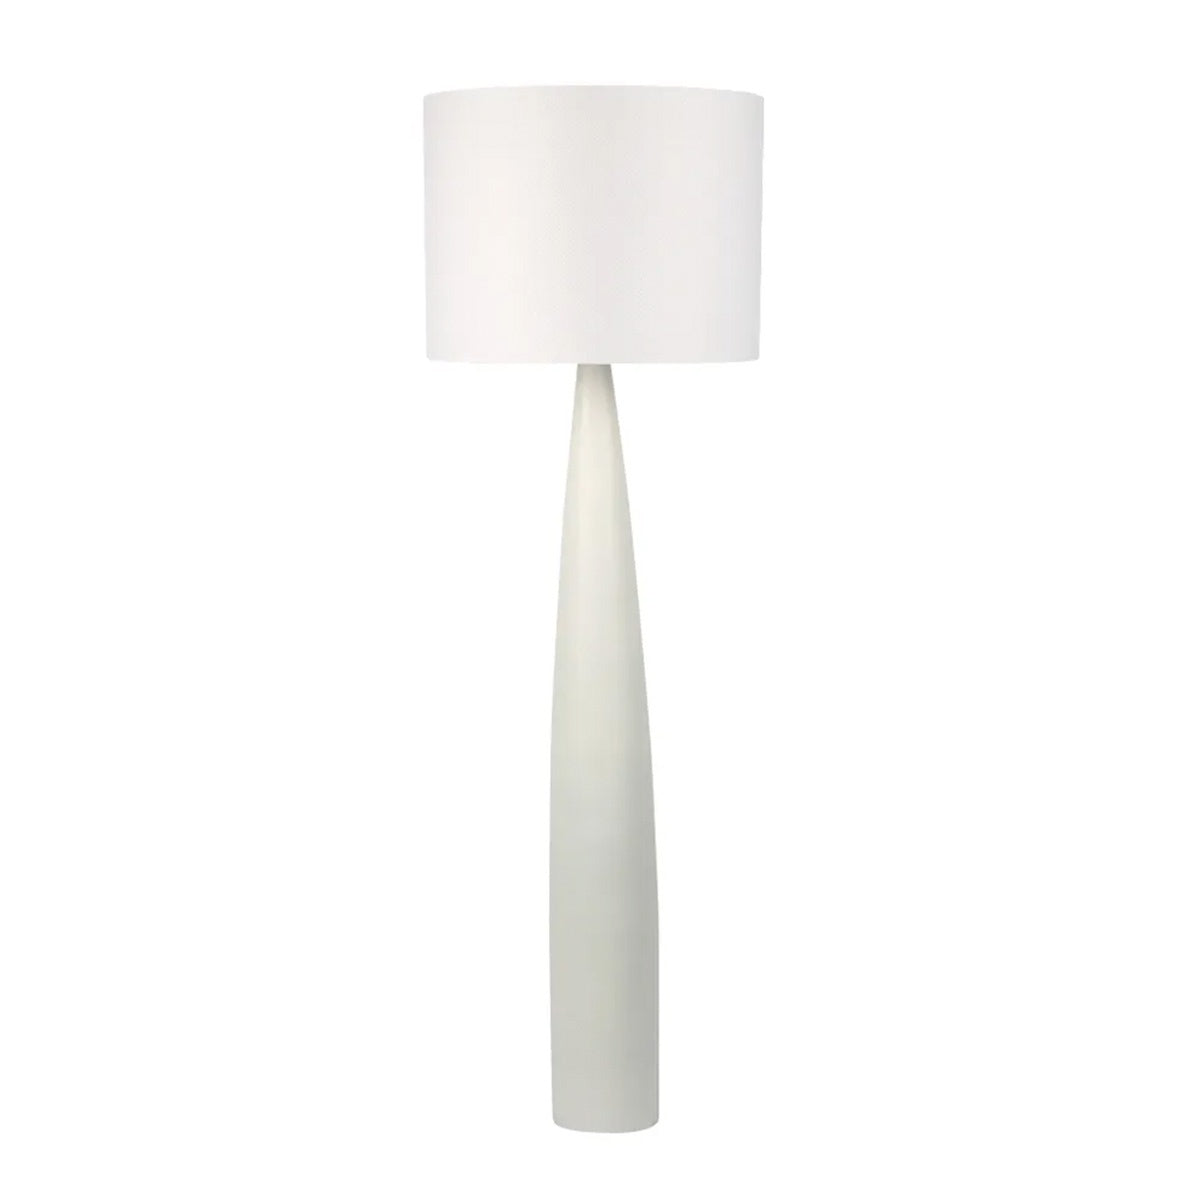 Samson Floor Lamp Base with Shade White